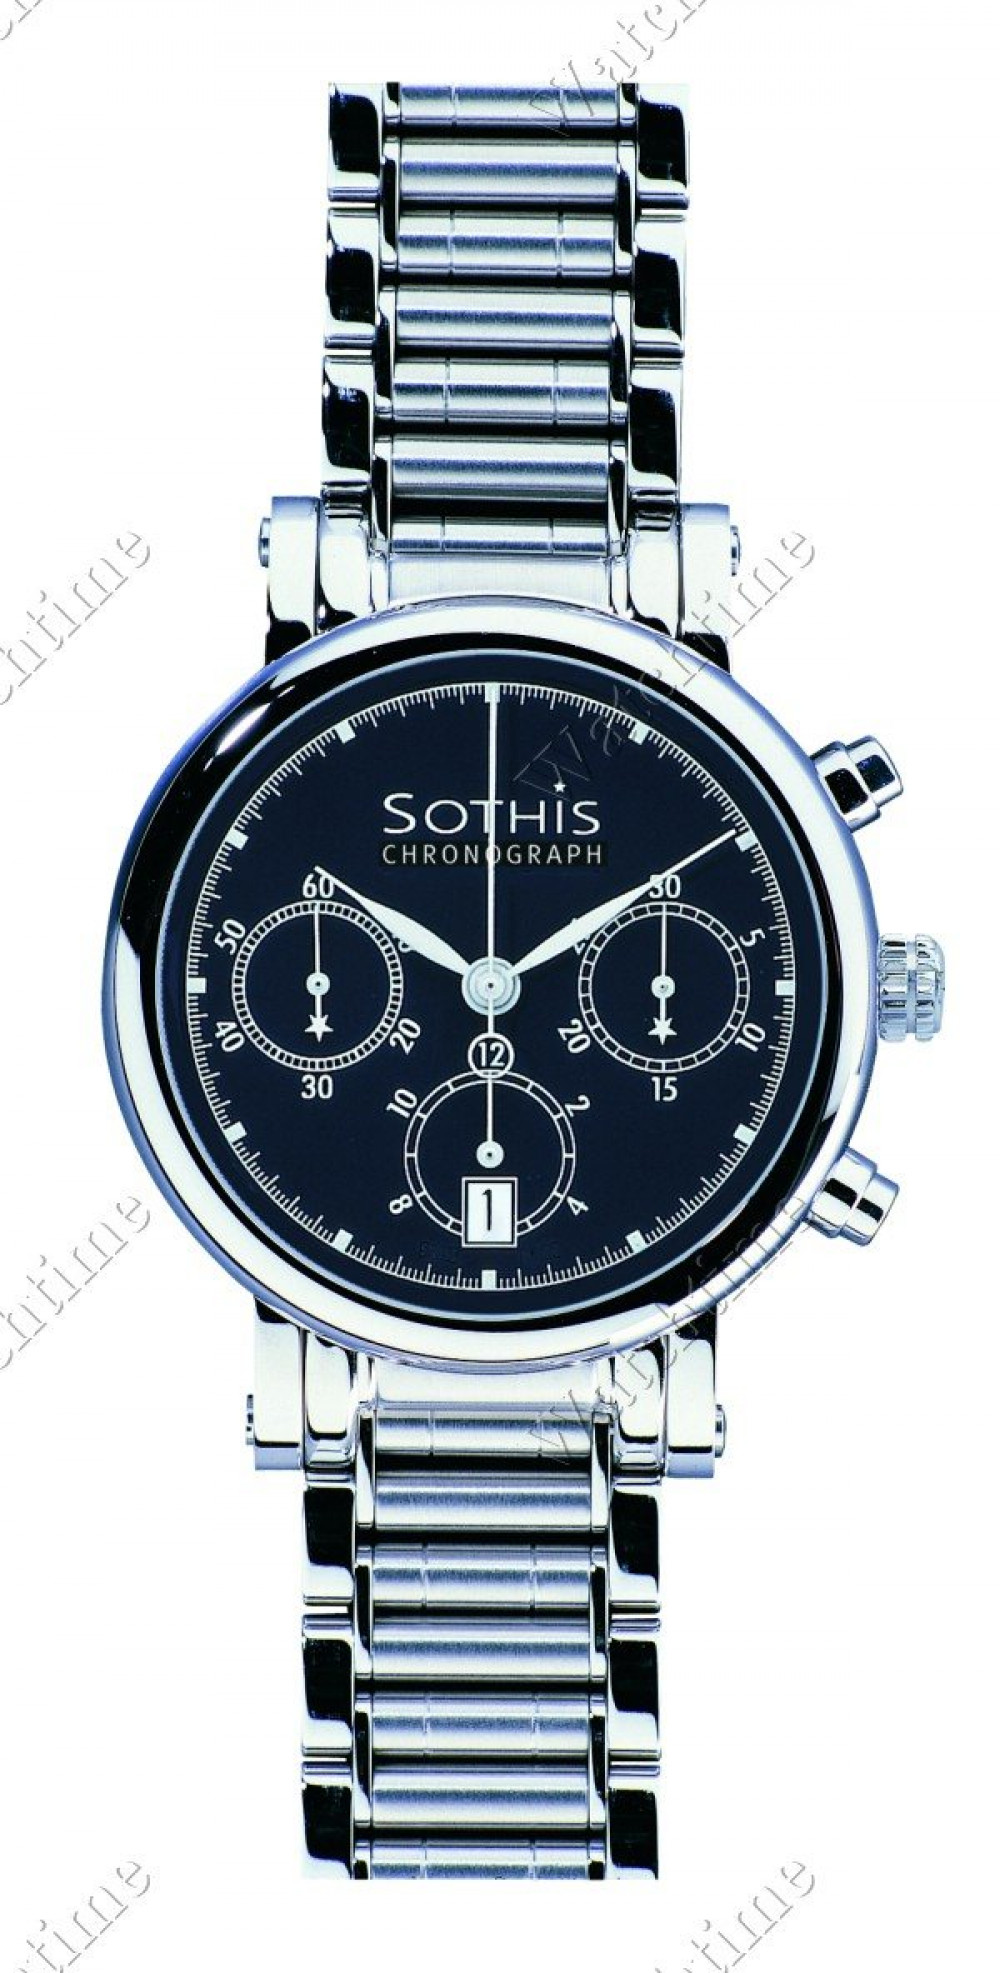 Zegarek firmy Sothis, model Triga